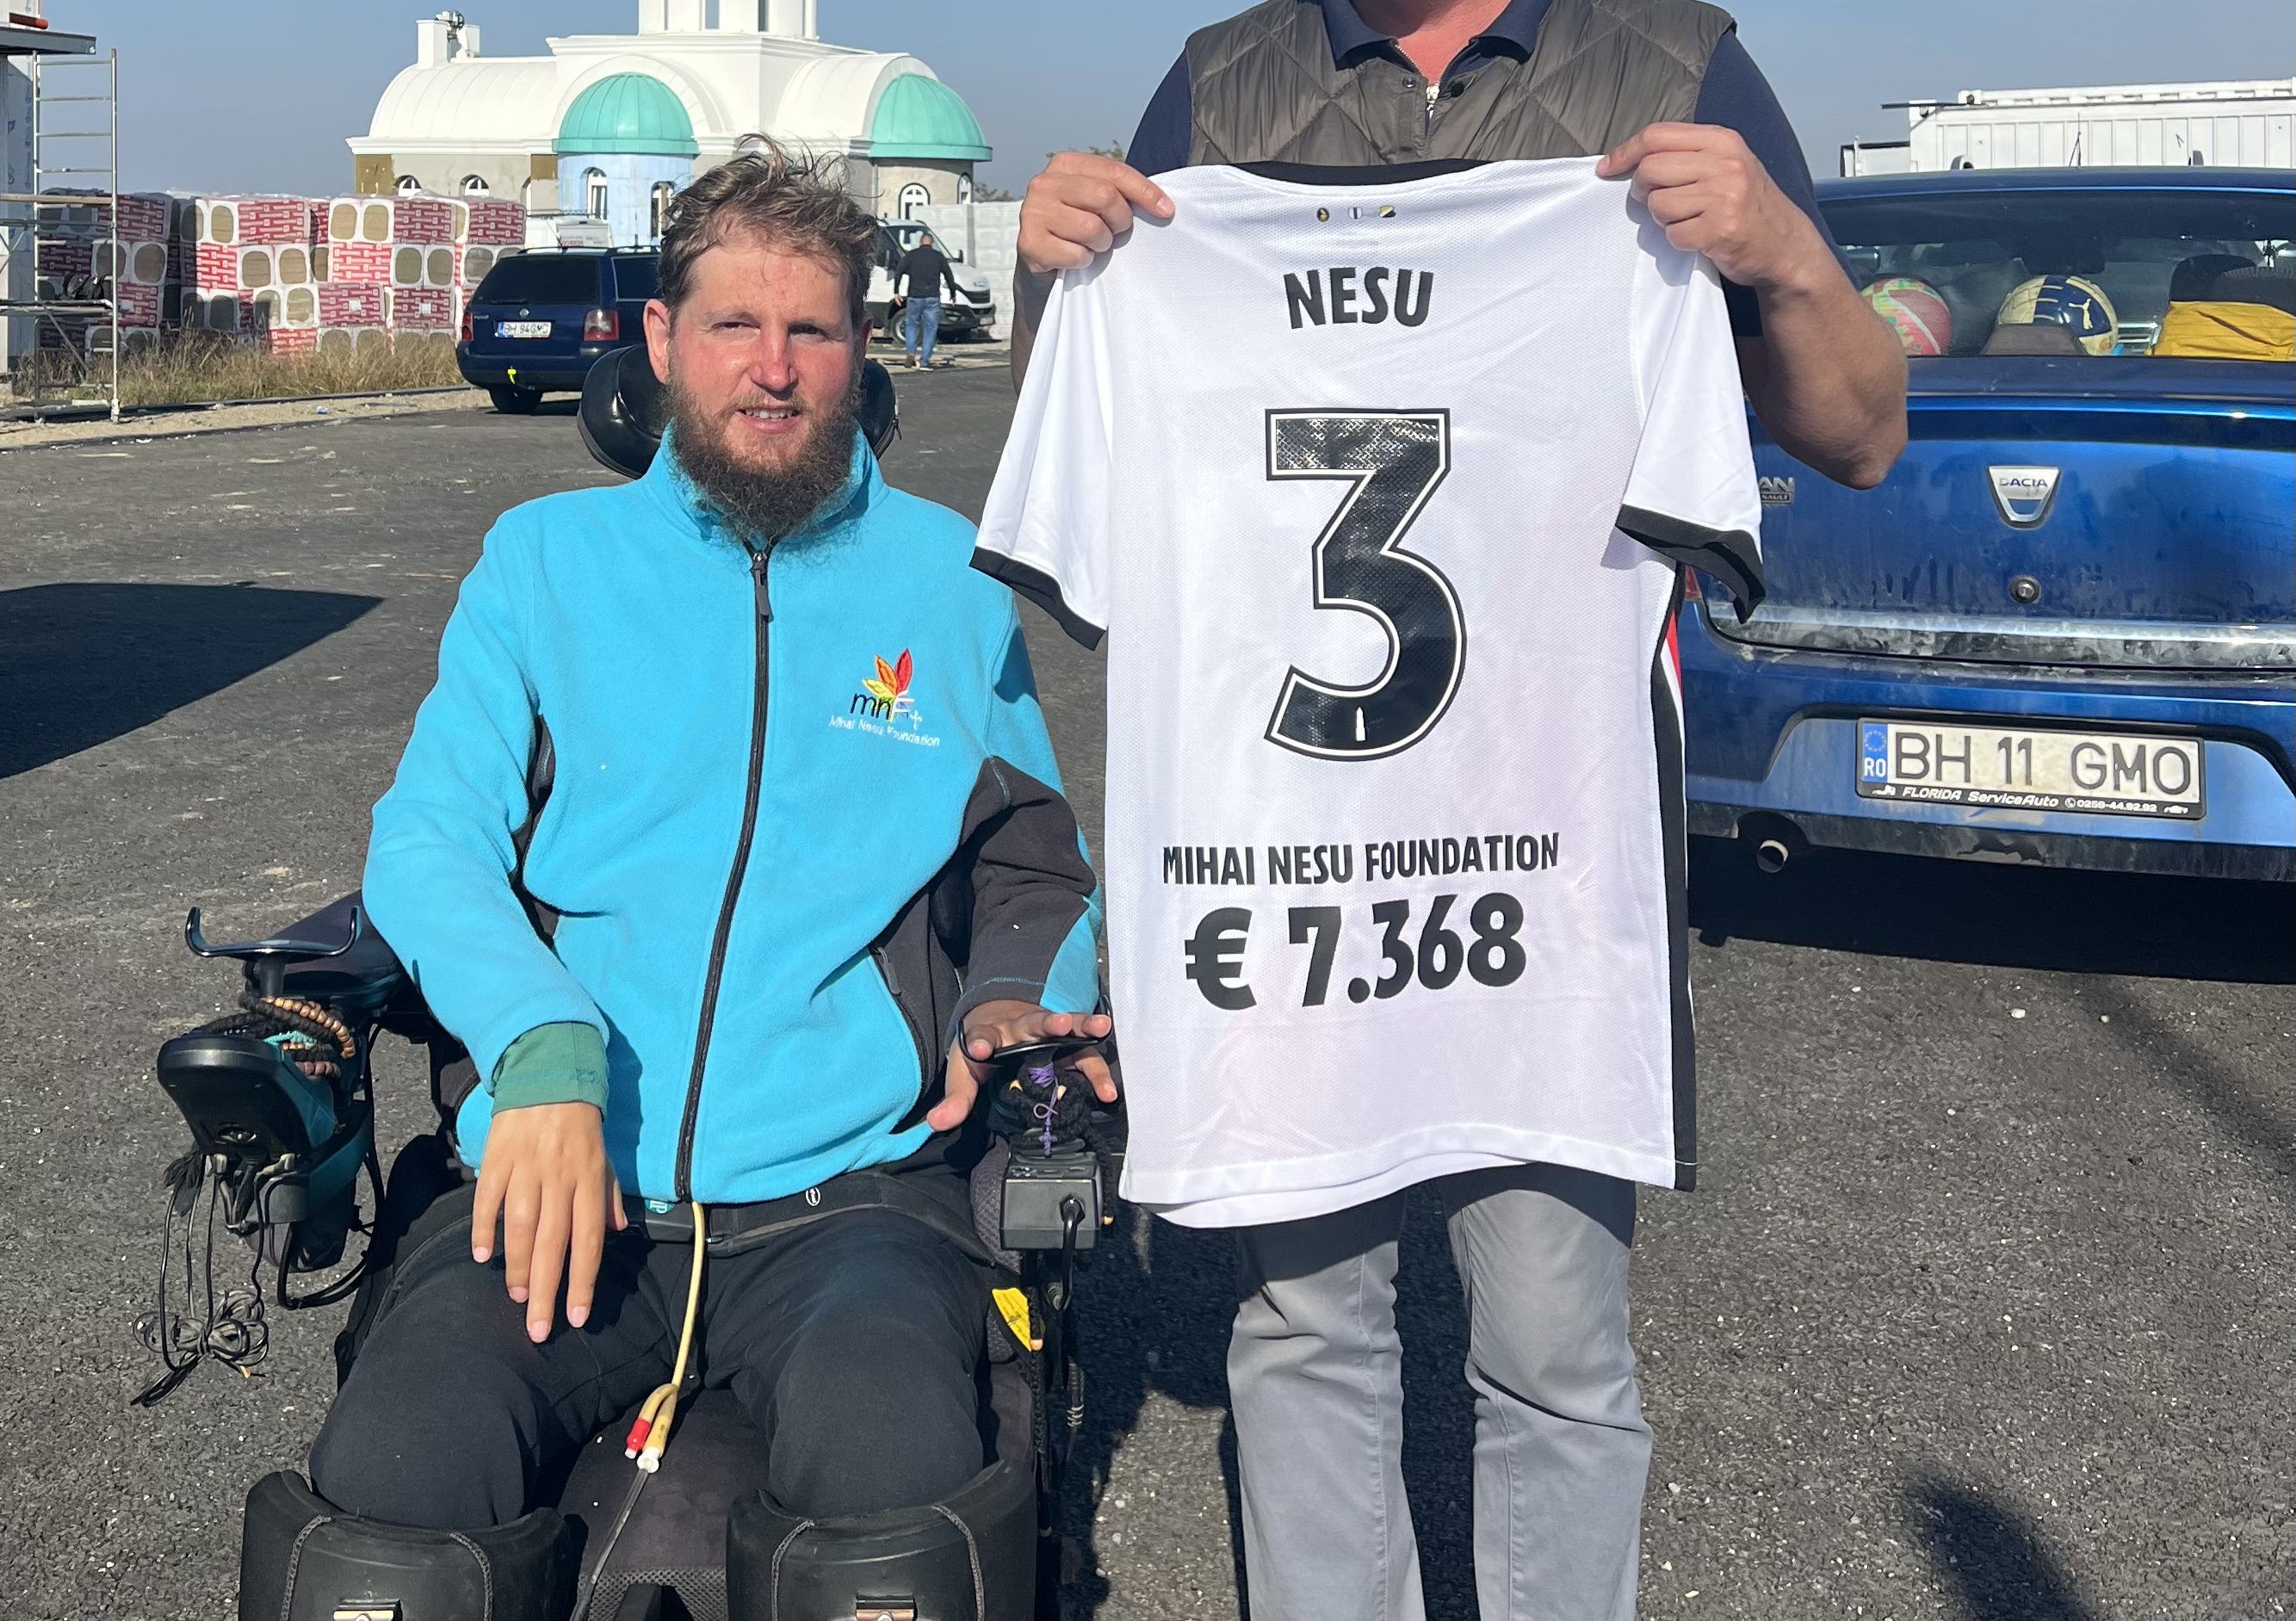 Ruim 7.000 euro voor Mihai Nesu Foundation